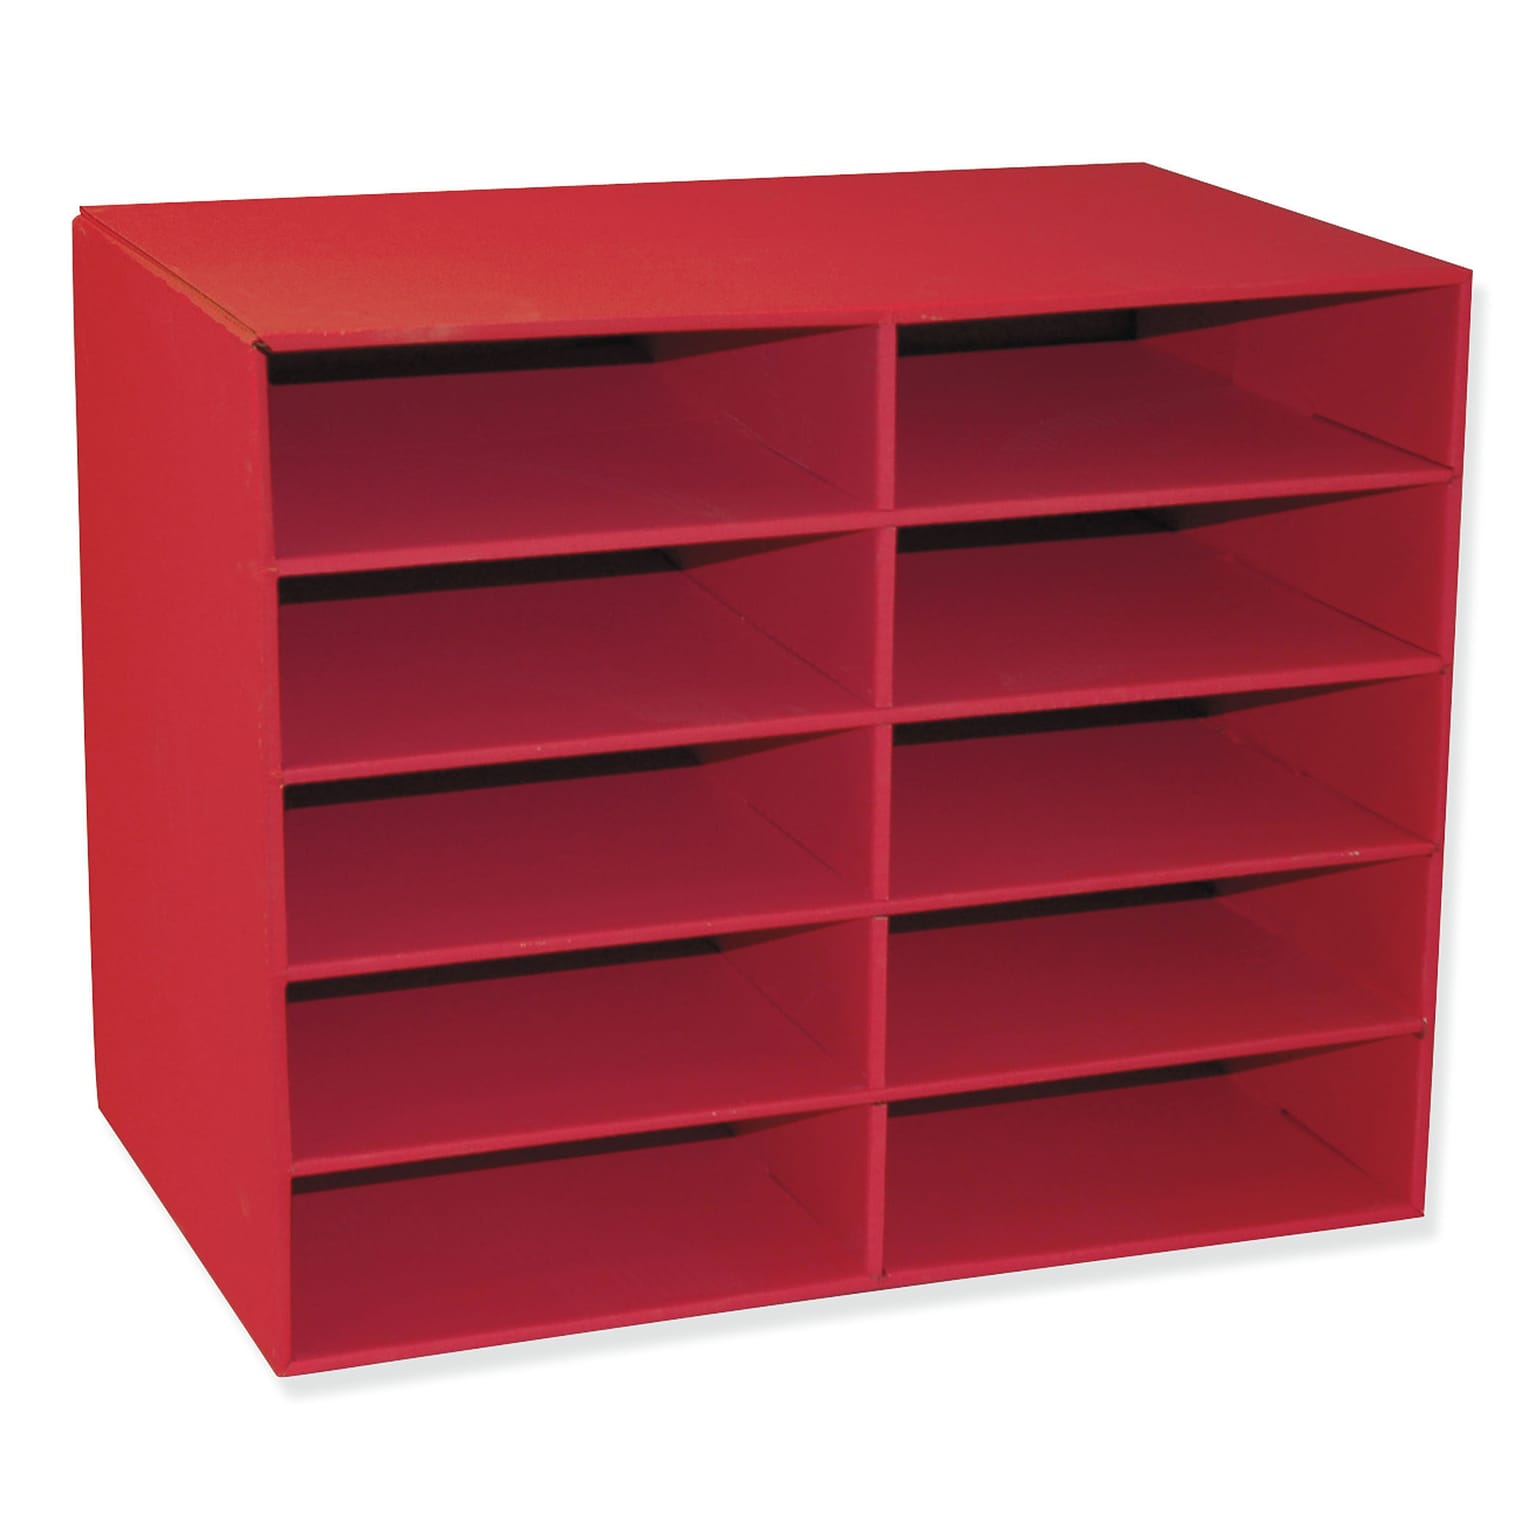 Pacon Classroom Keepers 10-Shelf Organizer, Corrugated Cardboard, 17 x 12.88 x 21, Red (PAC001314)